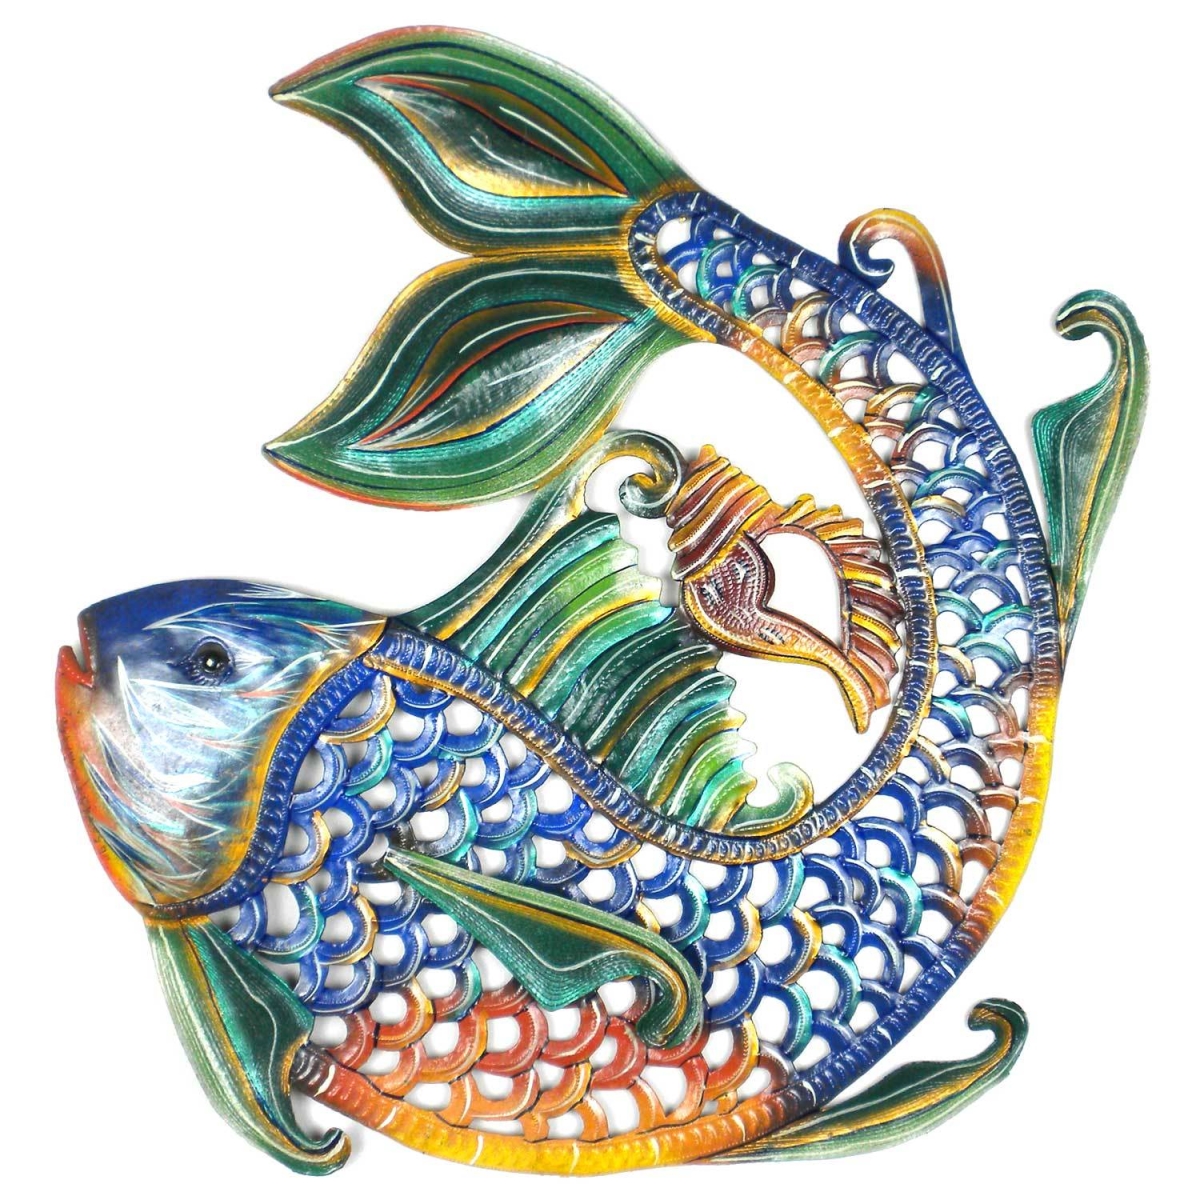 Hmdpfsh4 Handmade & Fair Trade 24 In. Painted Fish & Shell